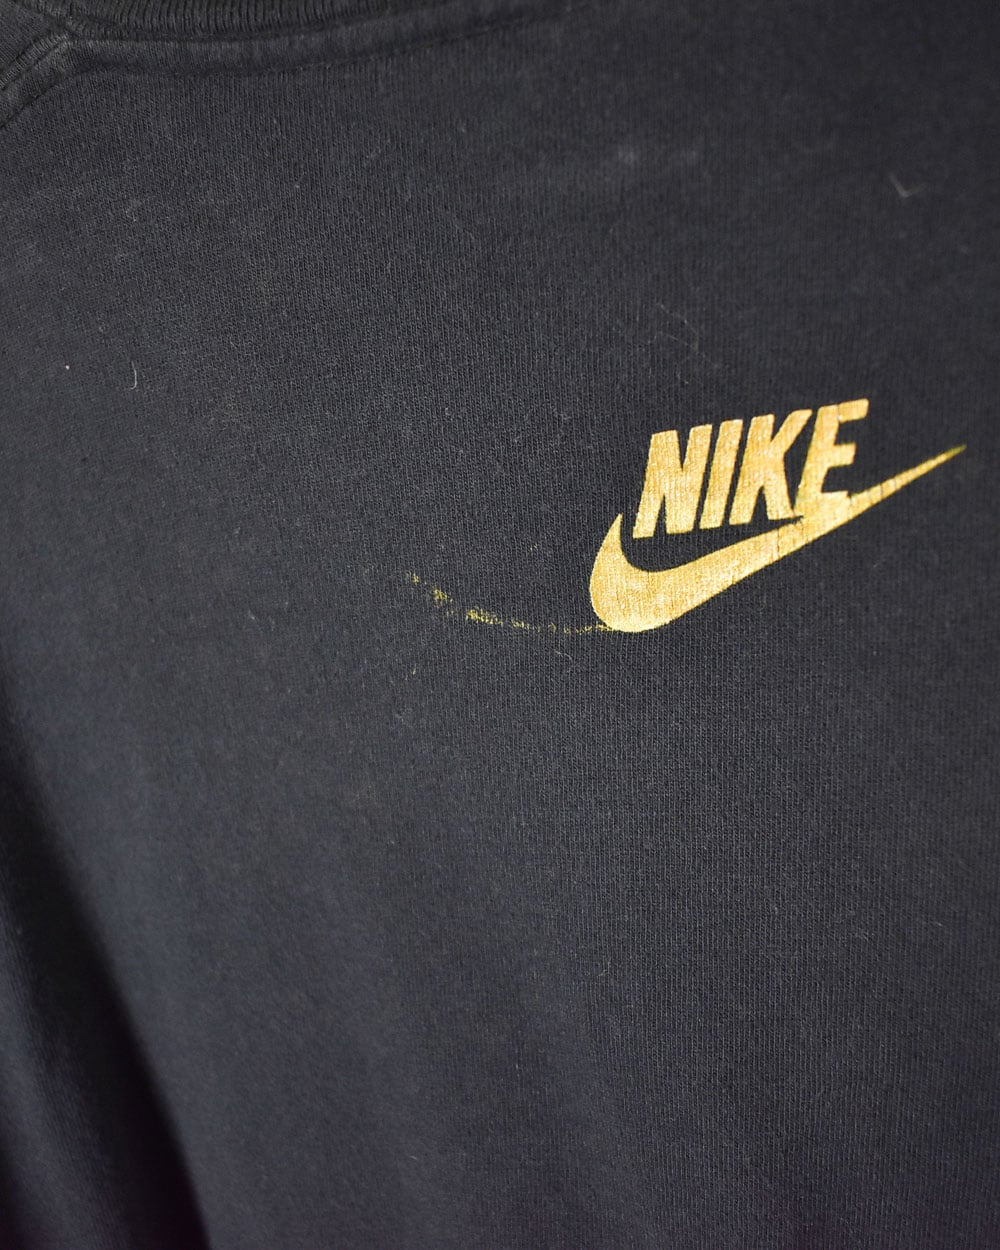 Black Nike Air Jordan MVP Graphic T-Shirt - Medium